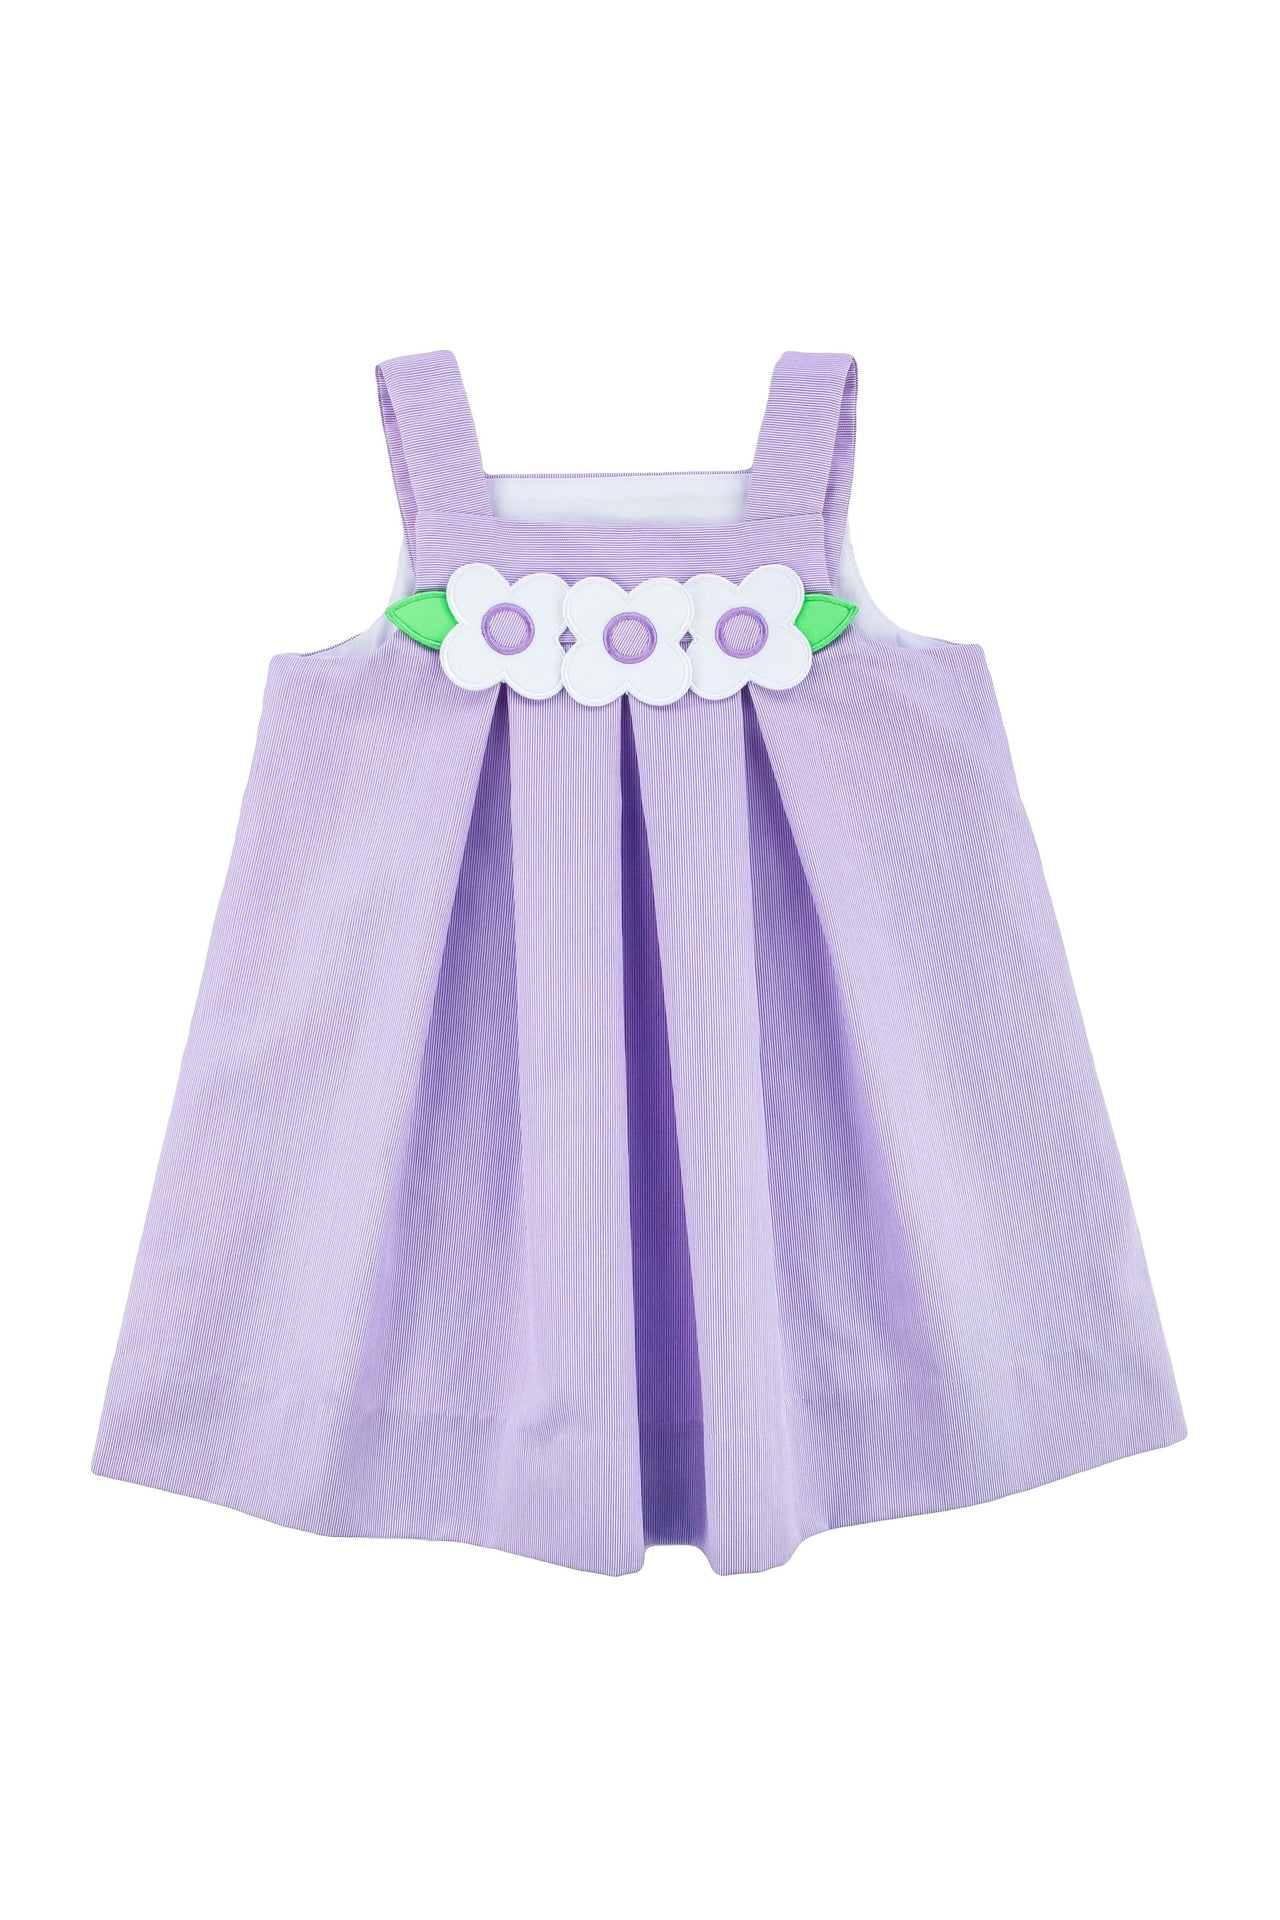 Florence Eiseman Pincord Dress W/ Flowers Purple/White C5212 5012